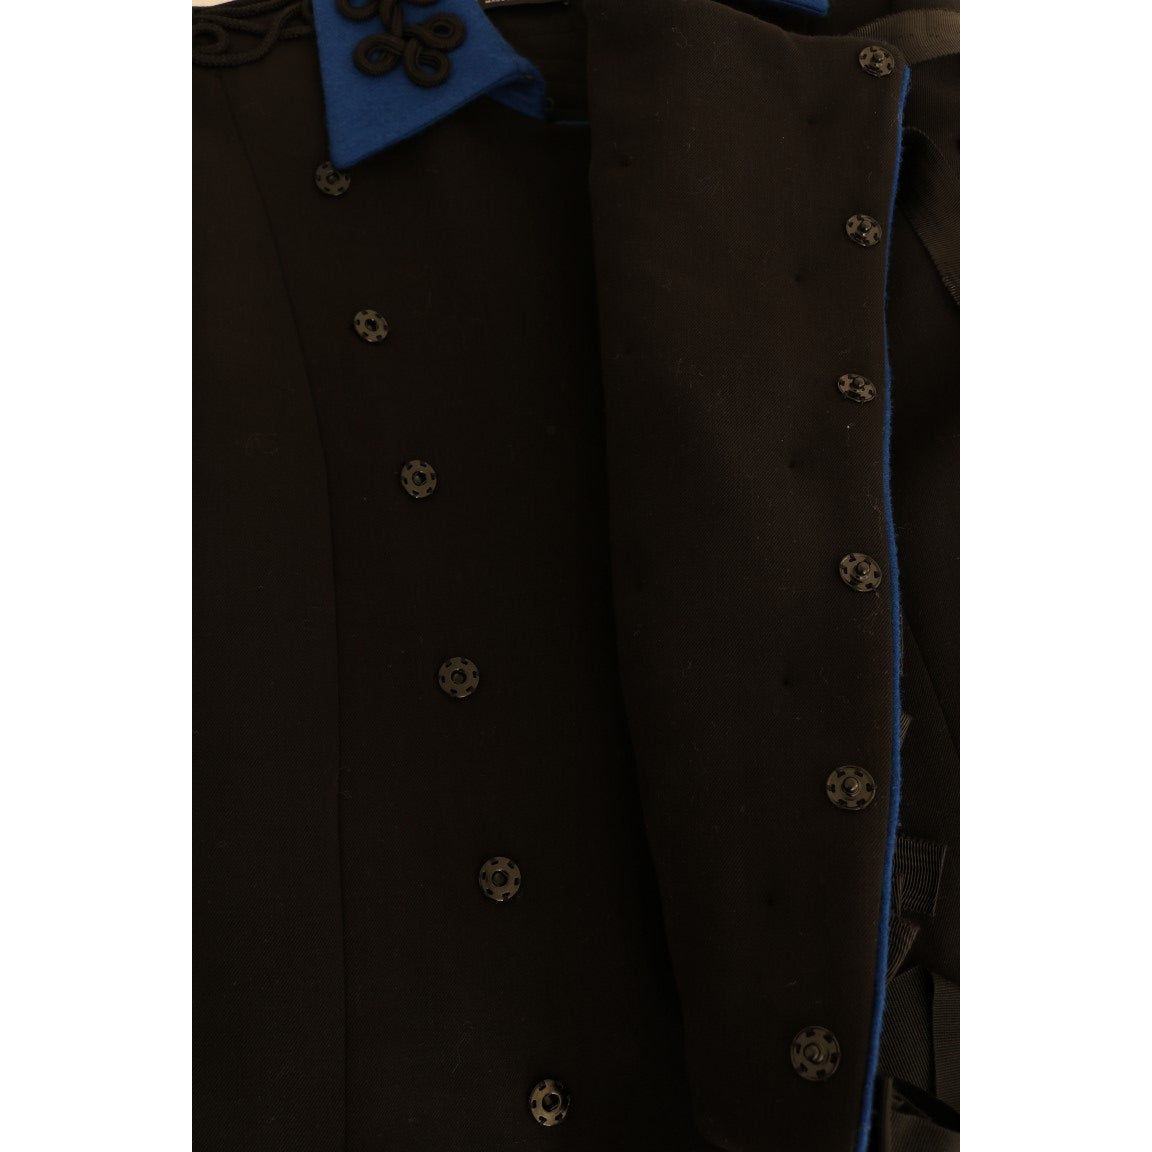 Dolce & Gabbana Chic Black & Blue Short Trench Jacket chic-black-blue-short-trench-jacket